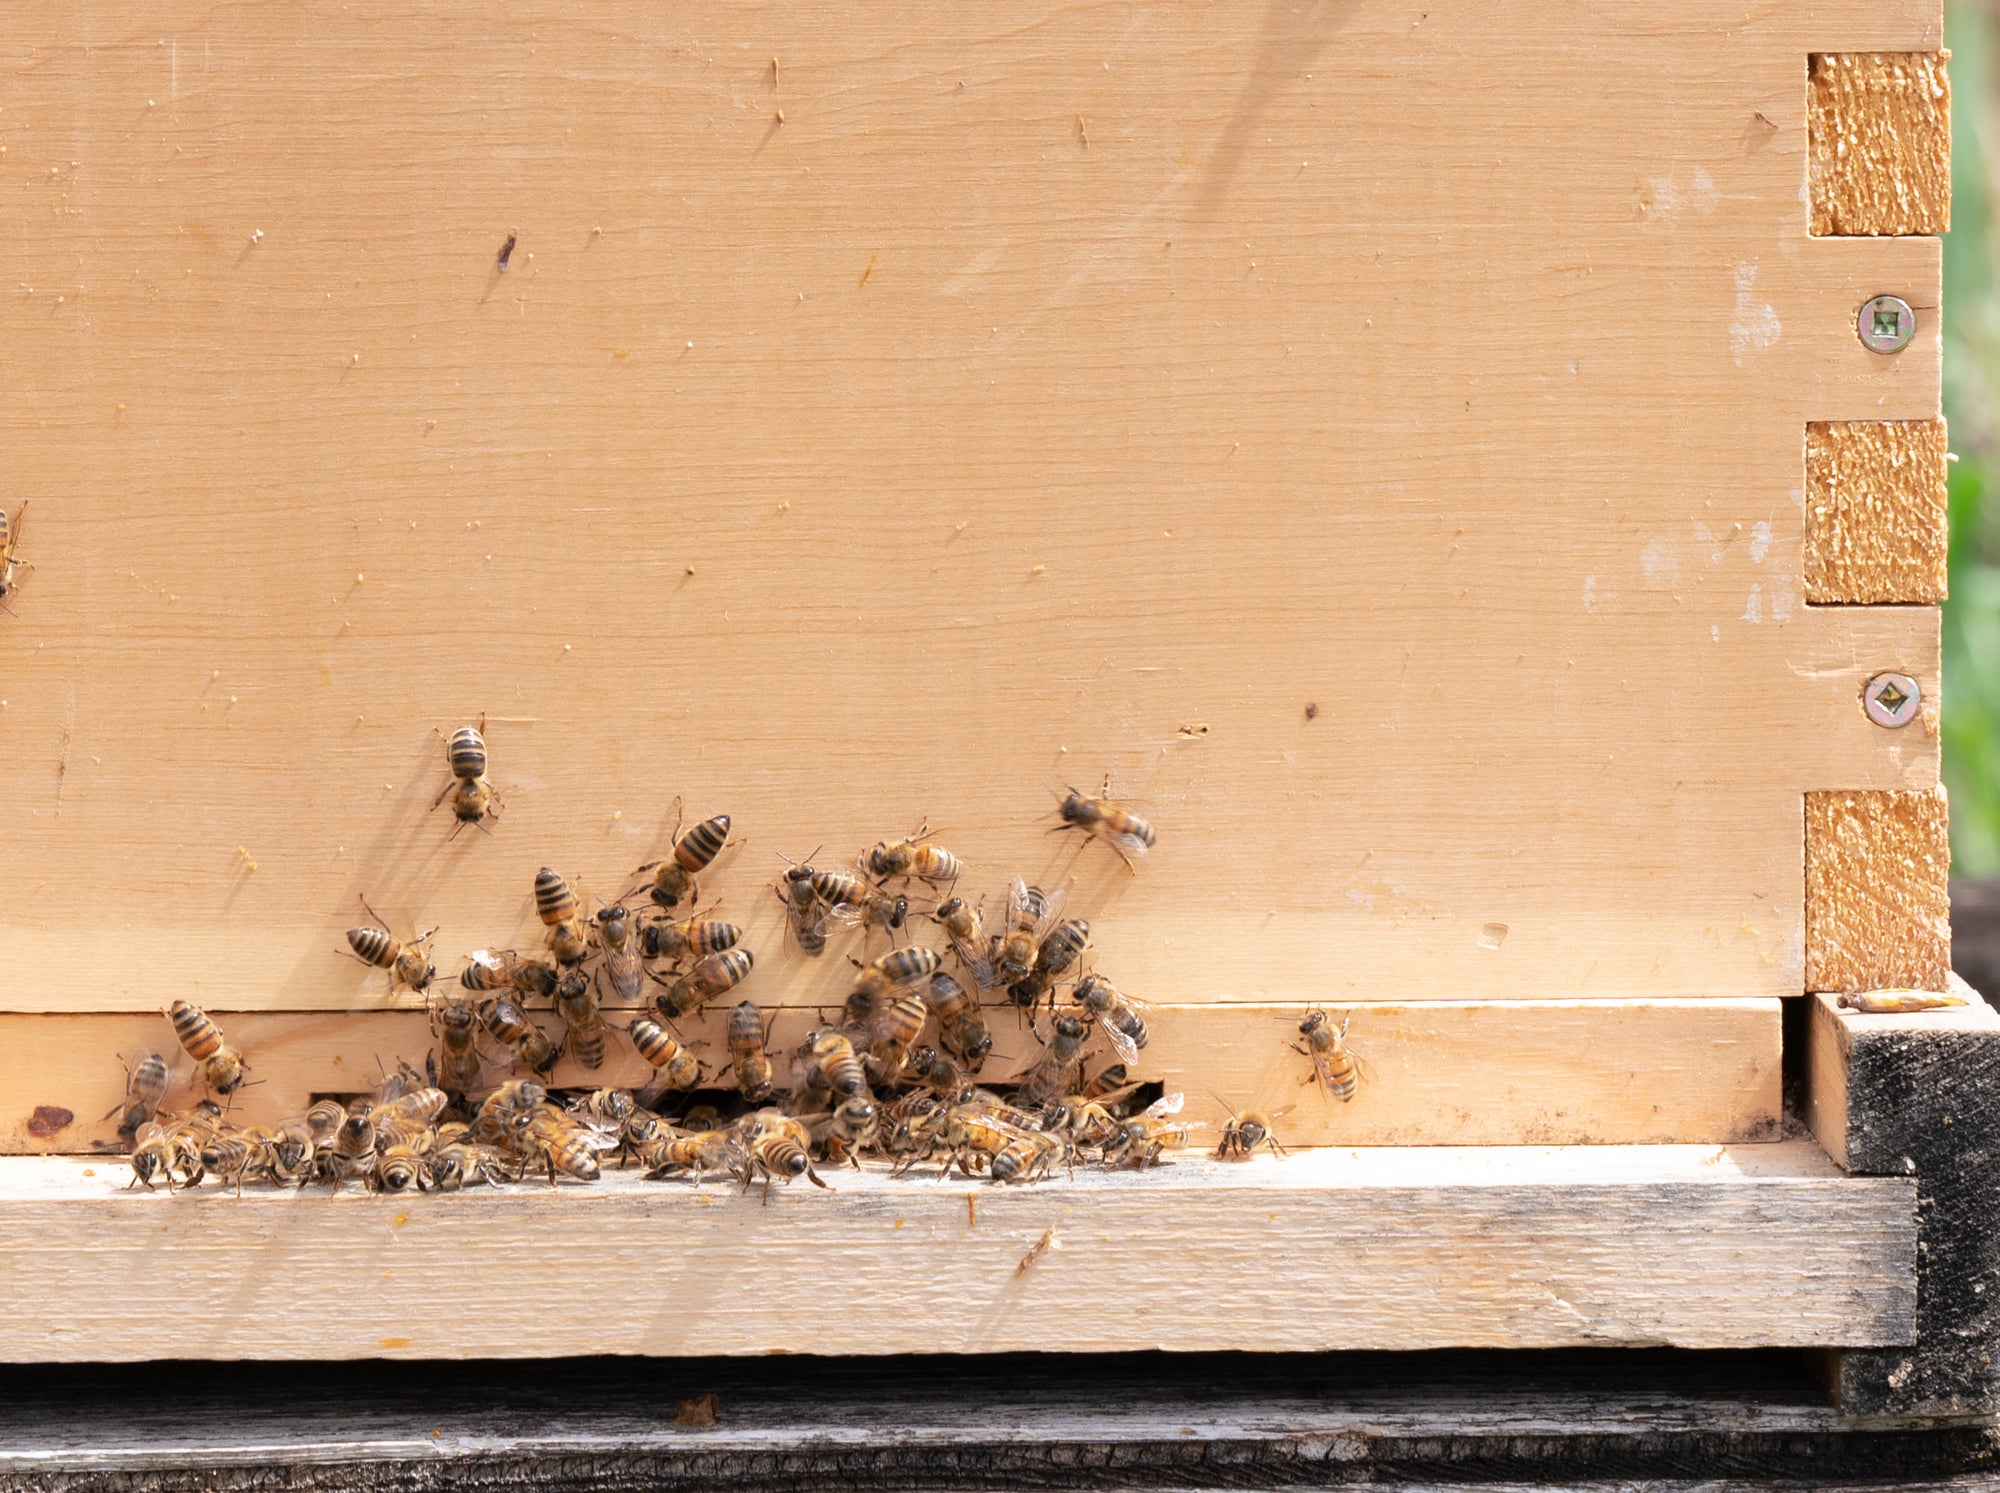 How Do I Prepare My Hive Before Fall?